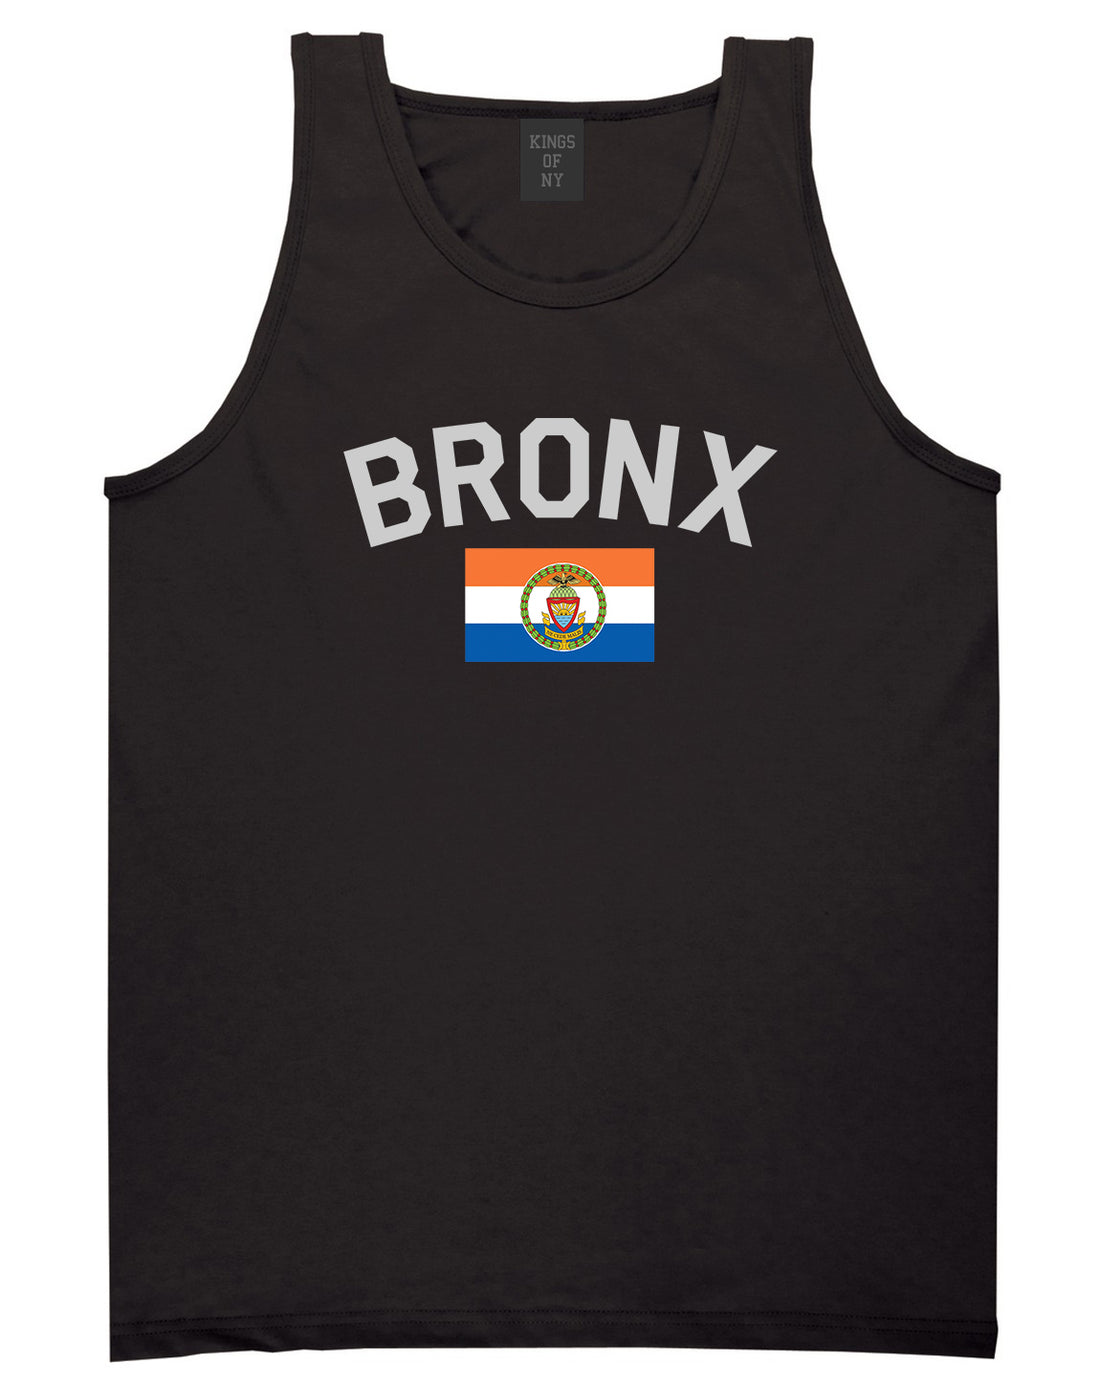 Bronx Flag Mens Tank Top Shirt Black